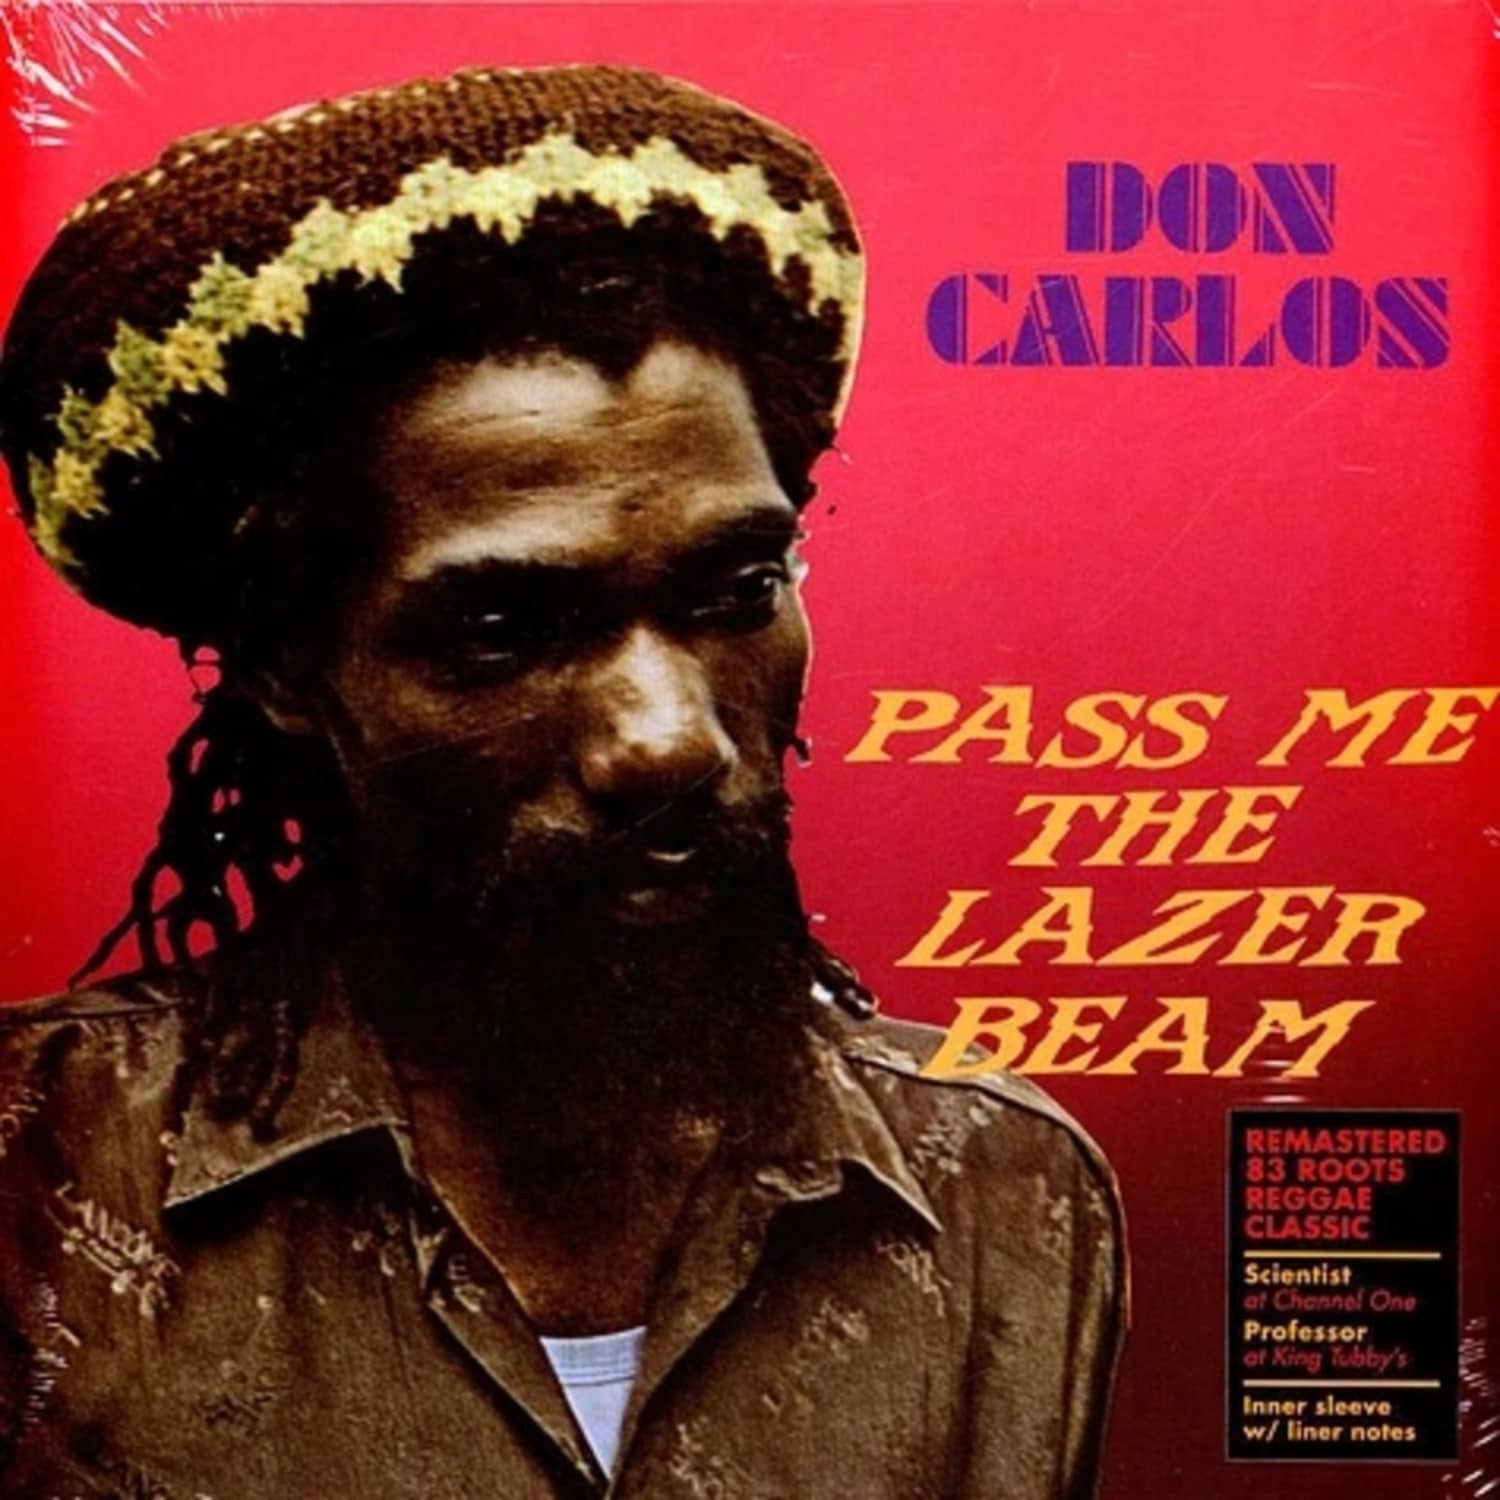 Don Carlos - PASS ME THE LAZER BEAM 